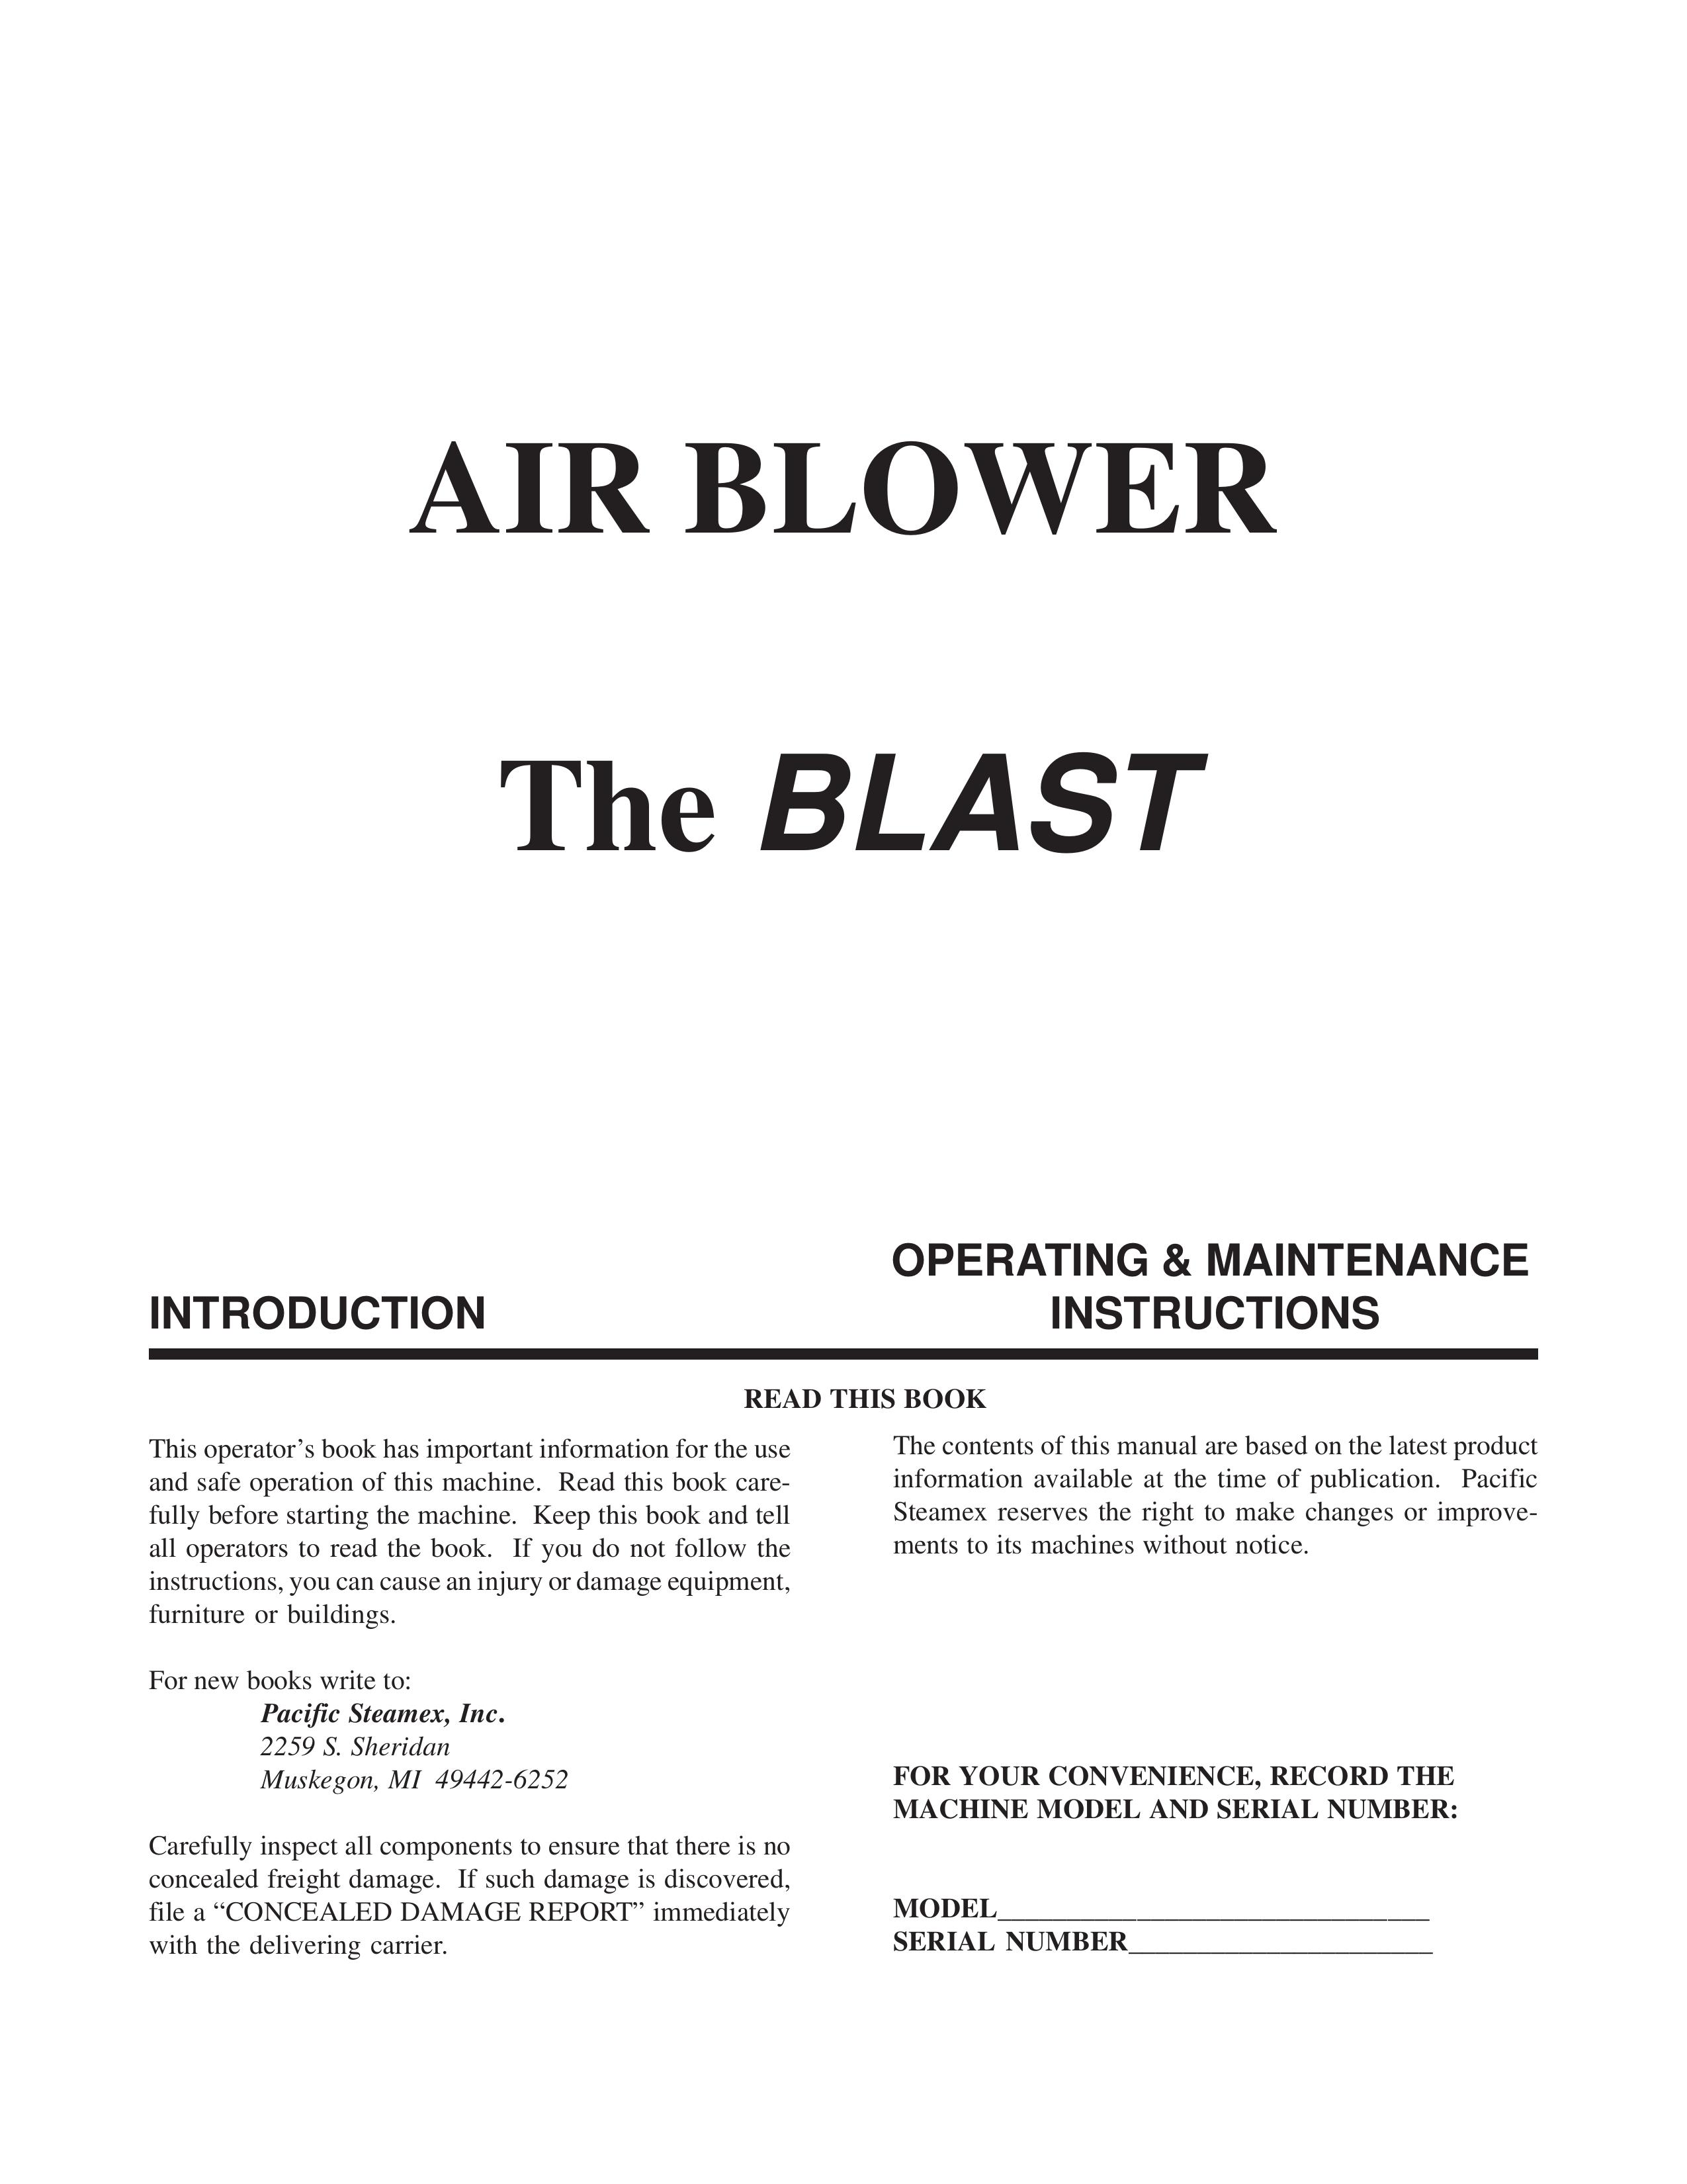 Sharp AIR BLOWER Blower User Manual